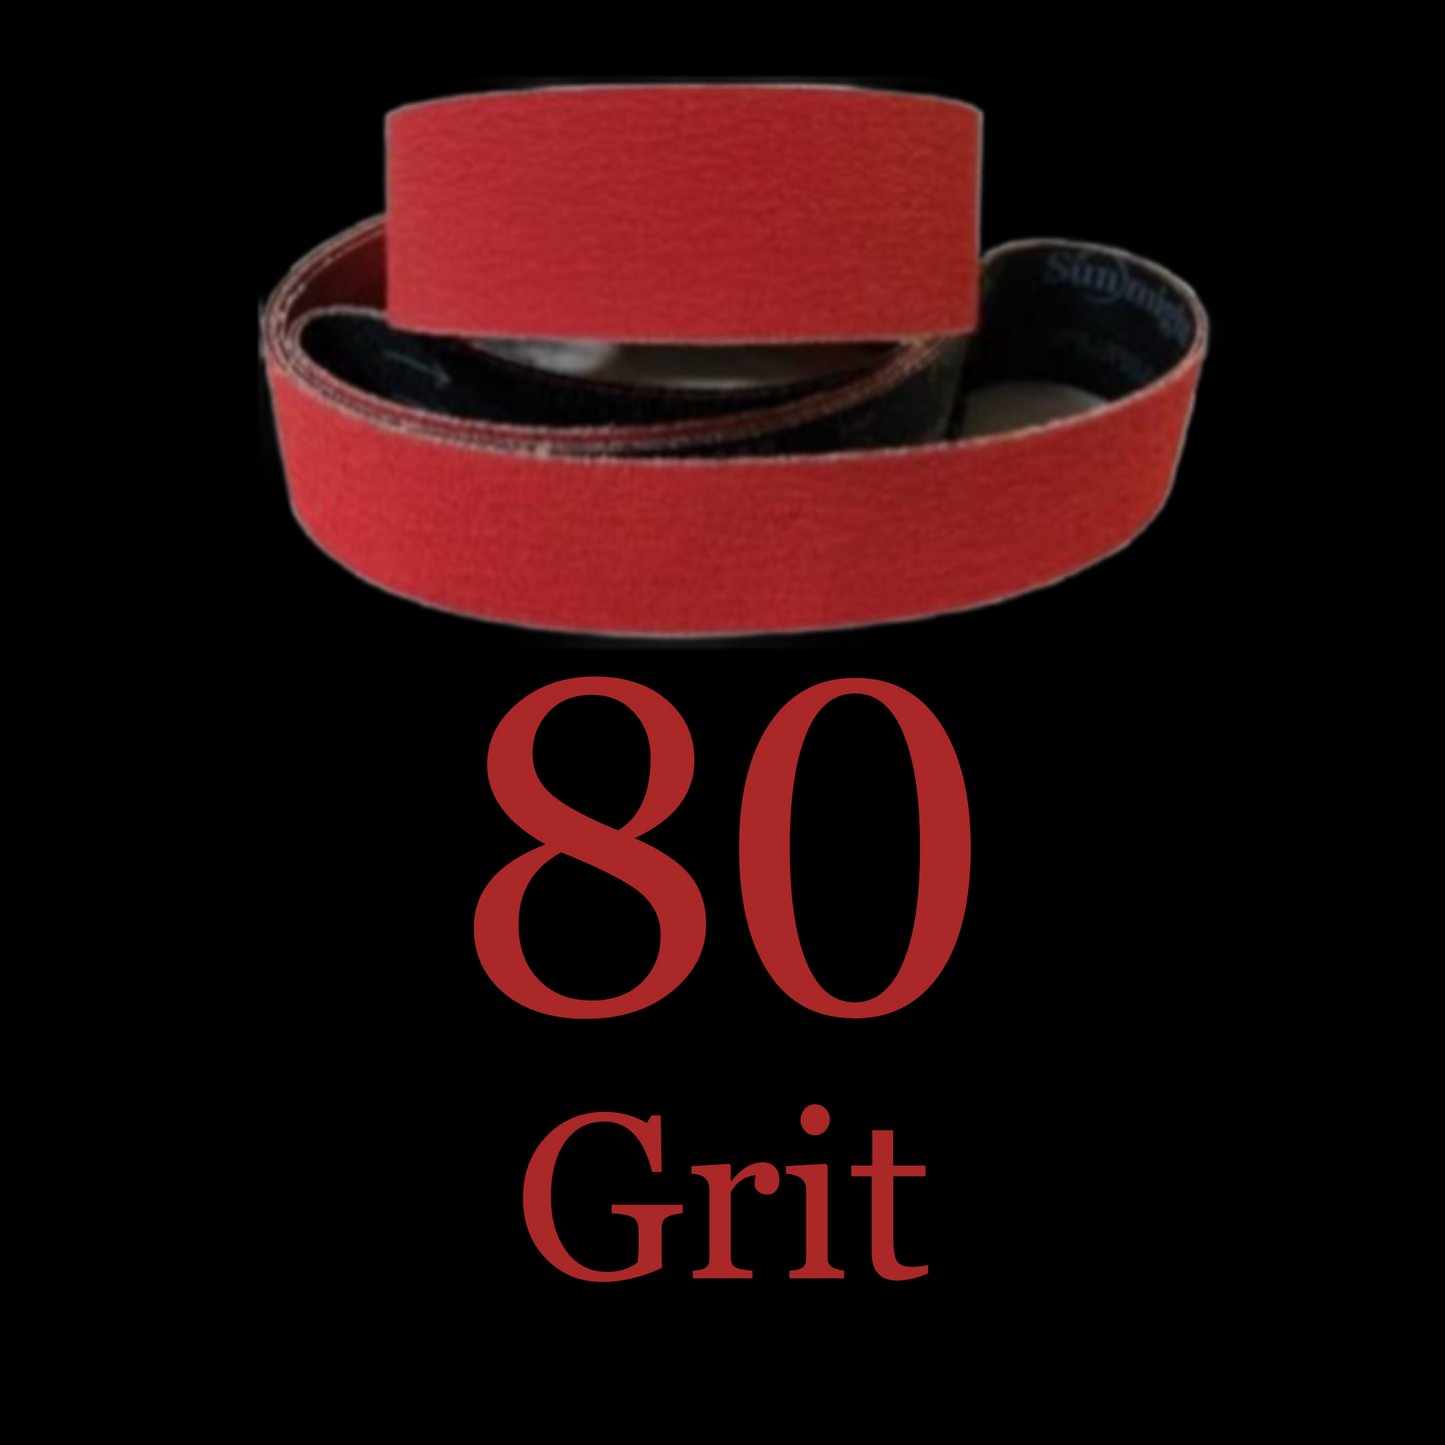 2” x 72” Metal Eater Premium Ceramic Belts 80 Grit